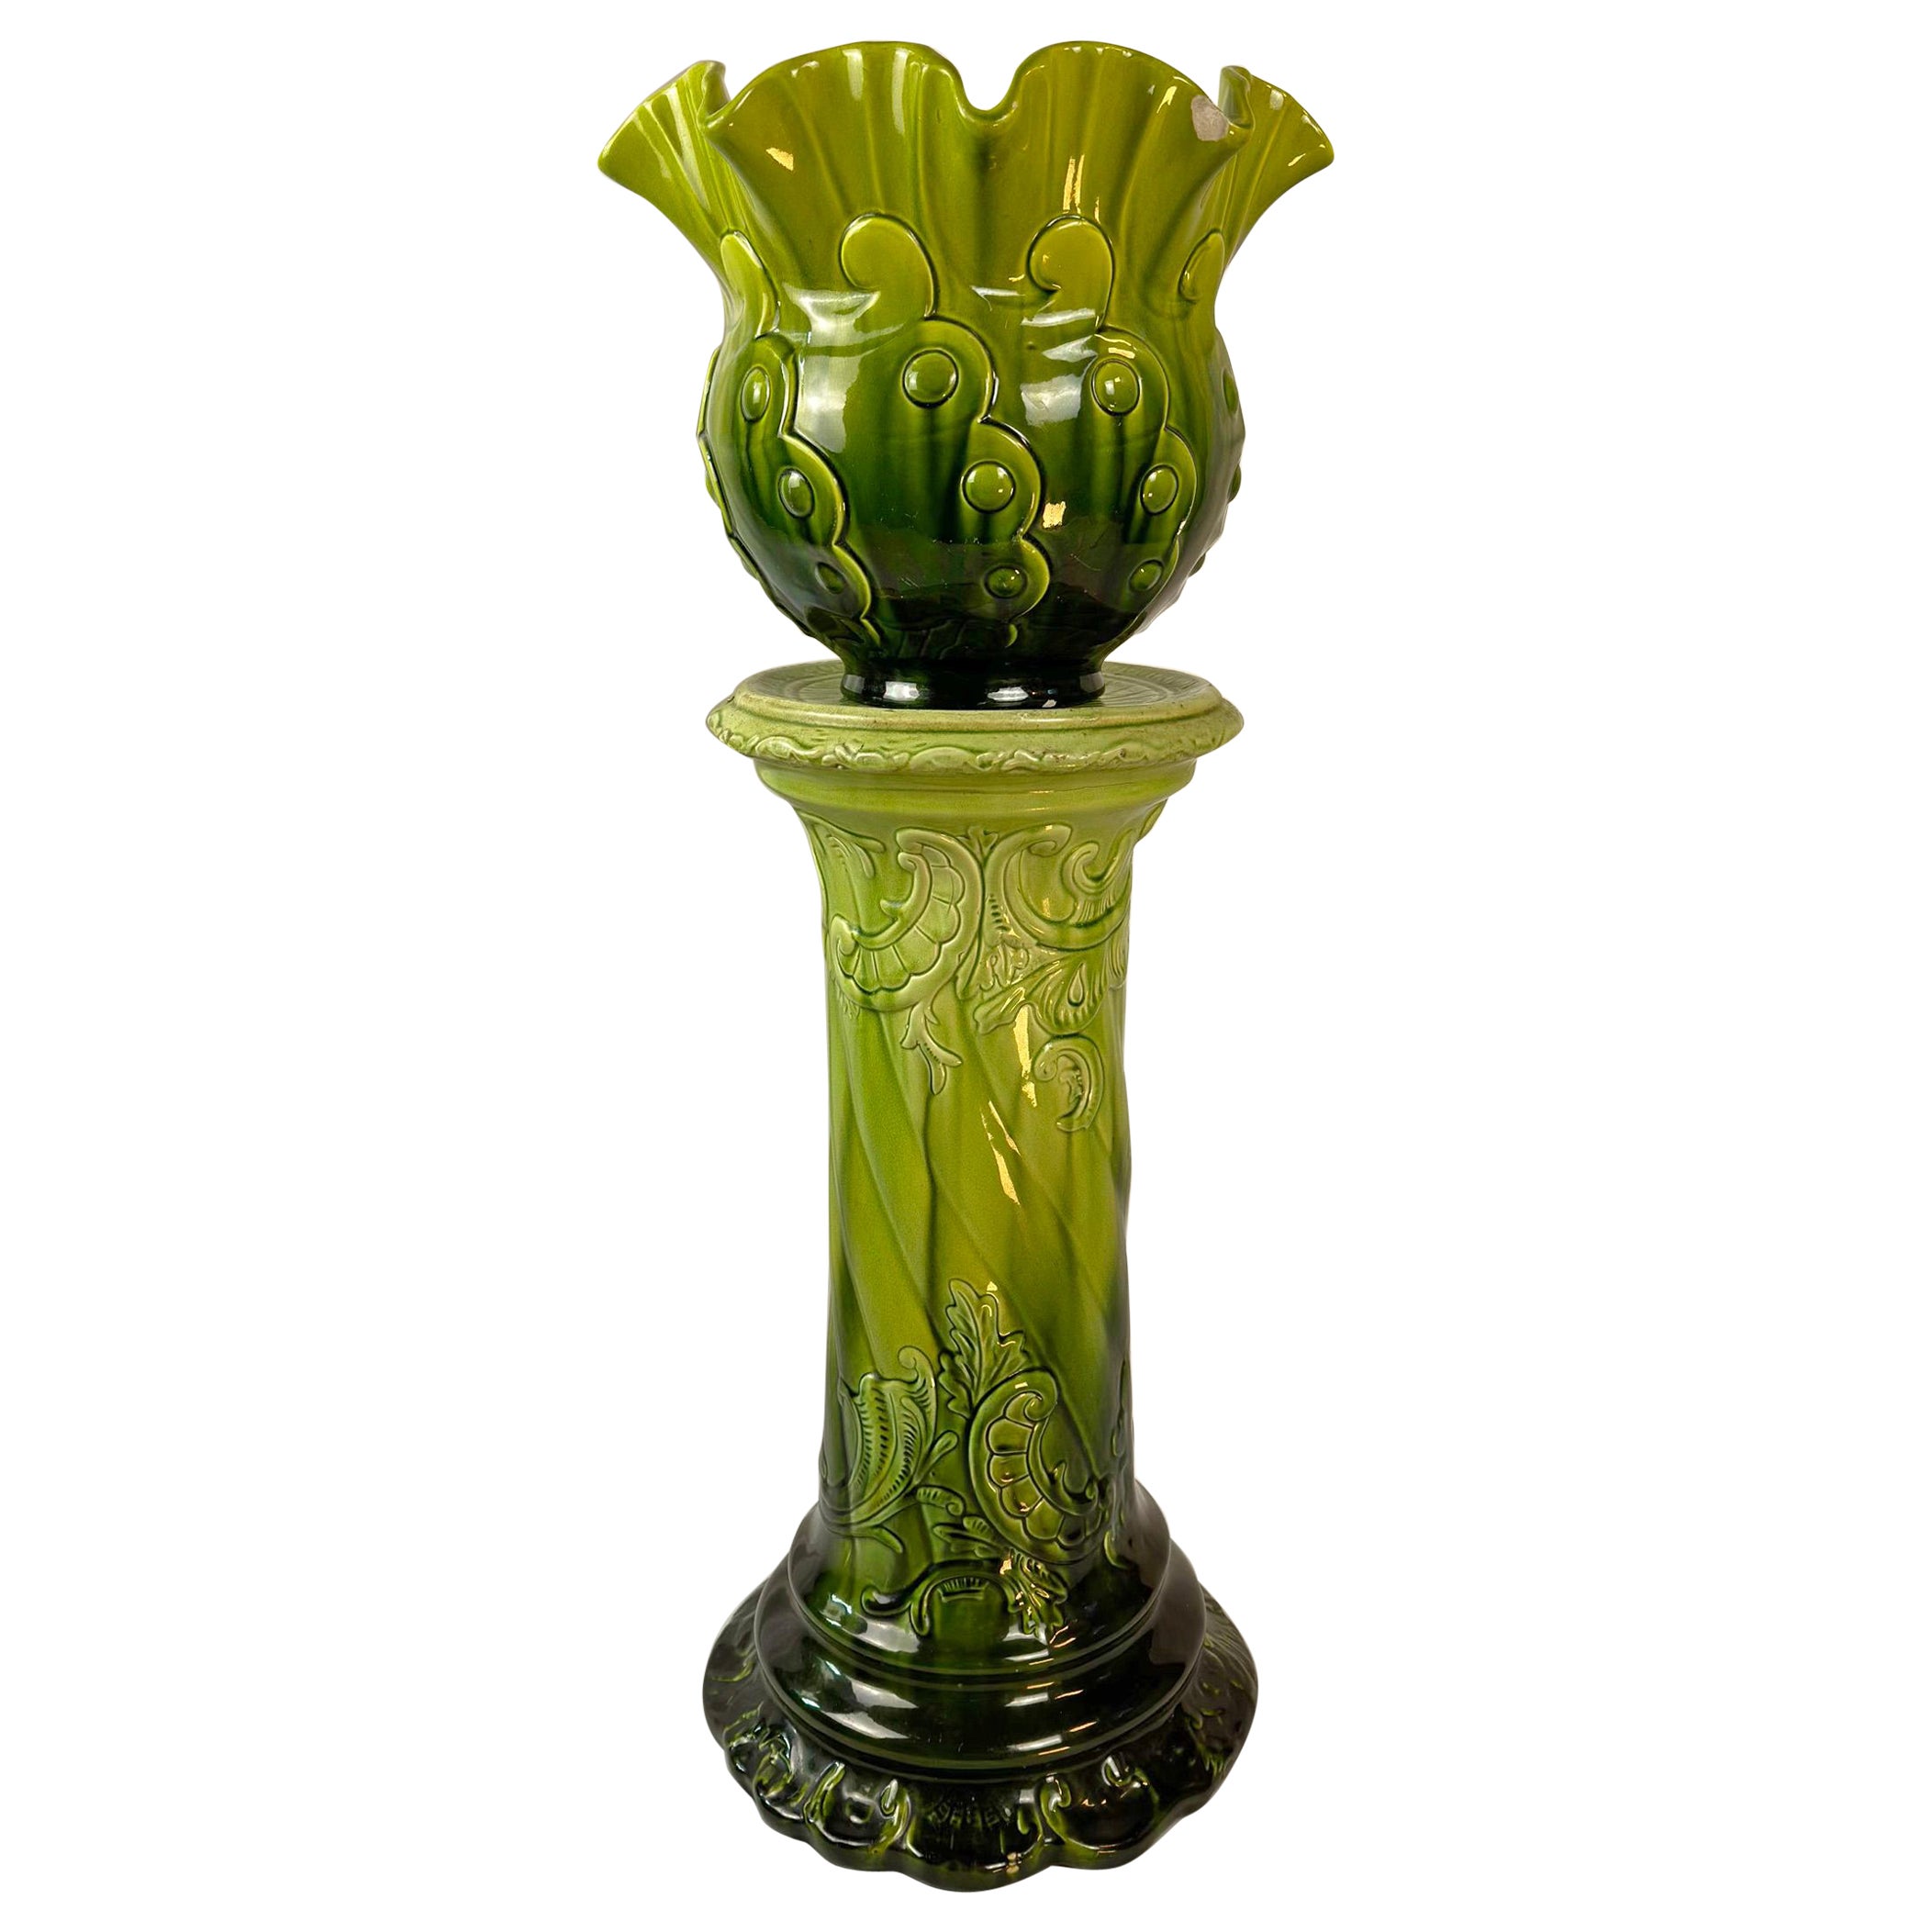 Viktorianische, Majolika-Jardinière – Pflanzgefäß und Sockel aus grüner Keramik von Bretby